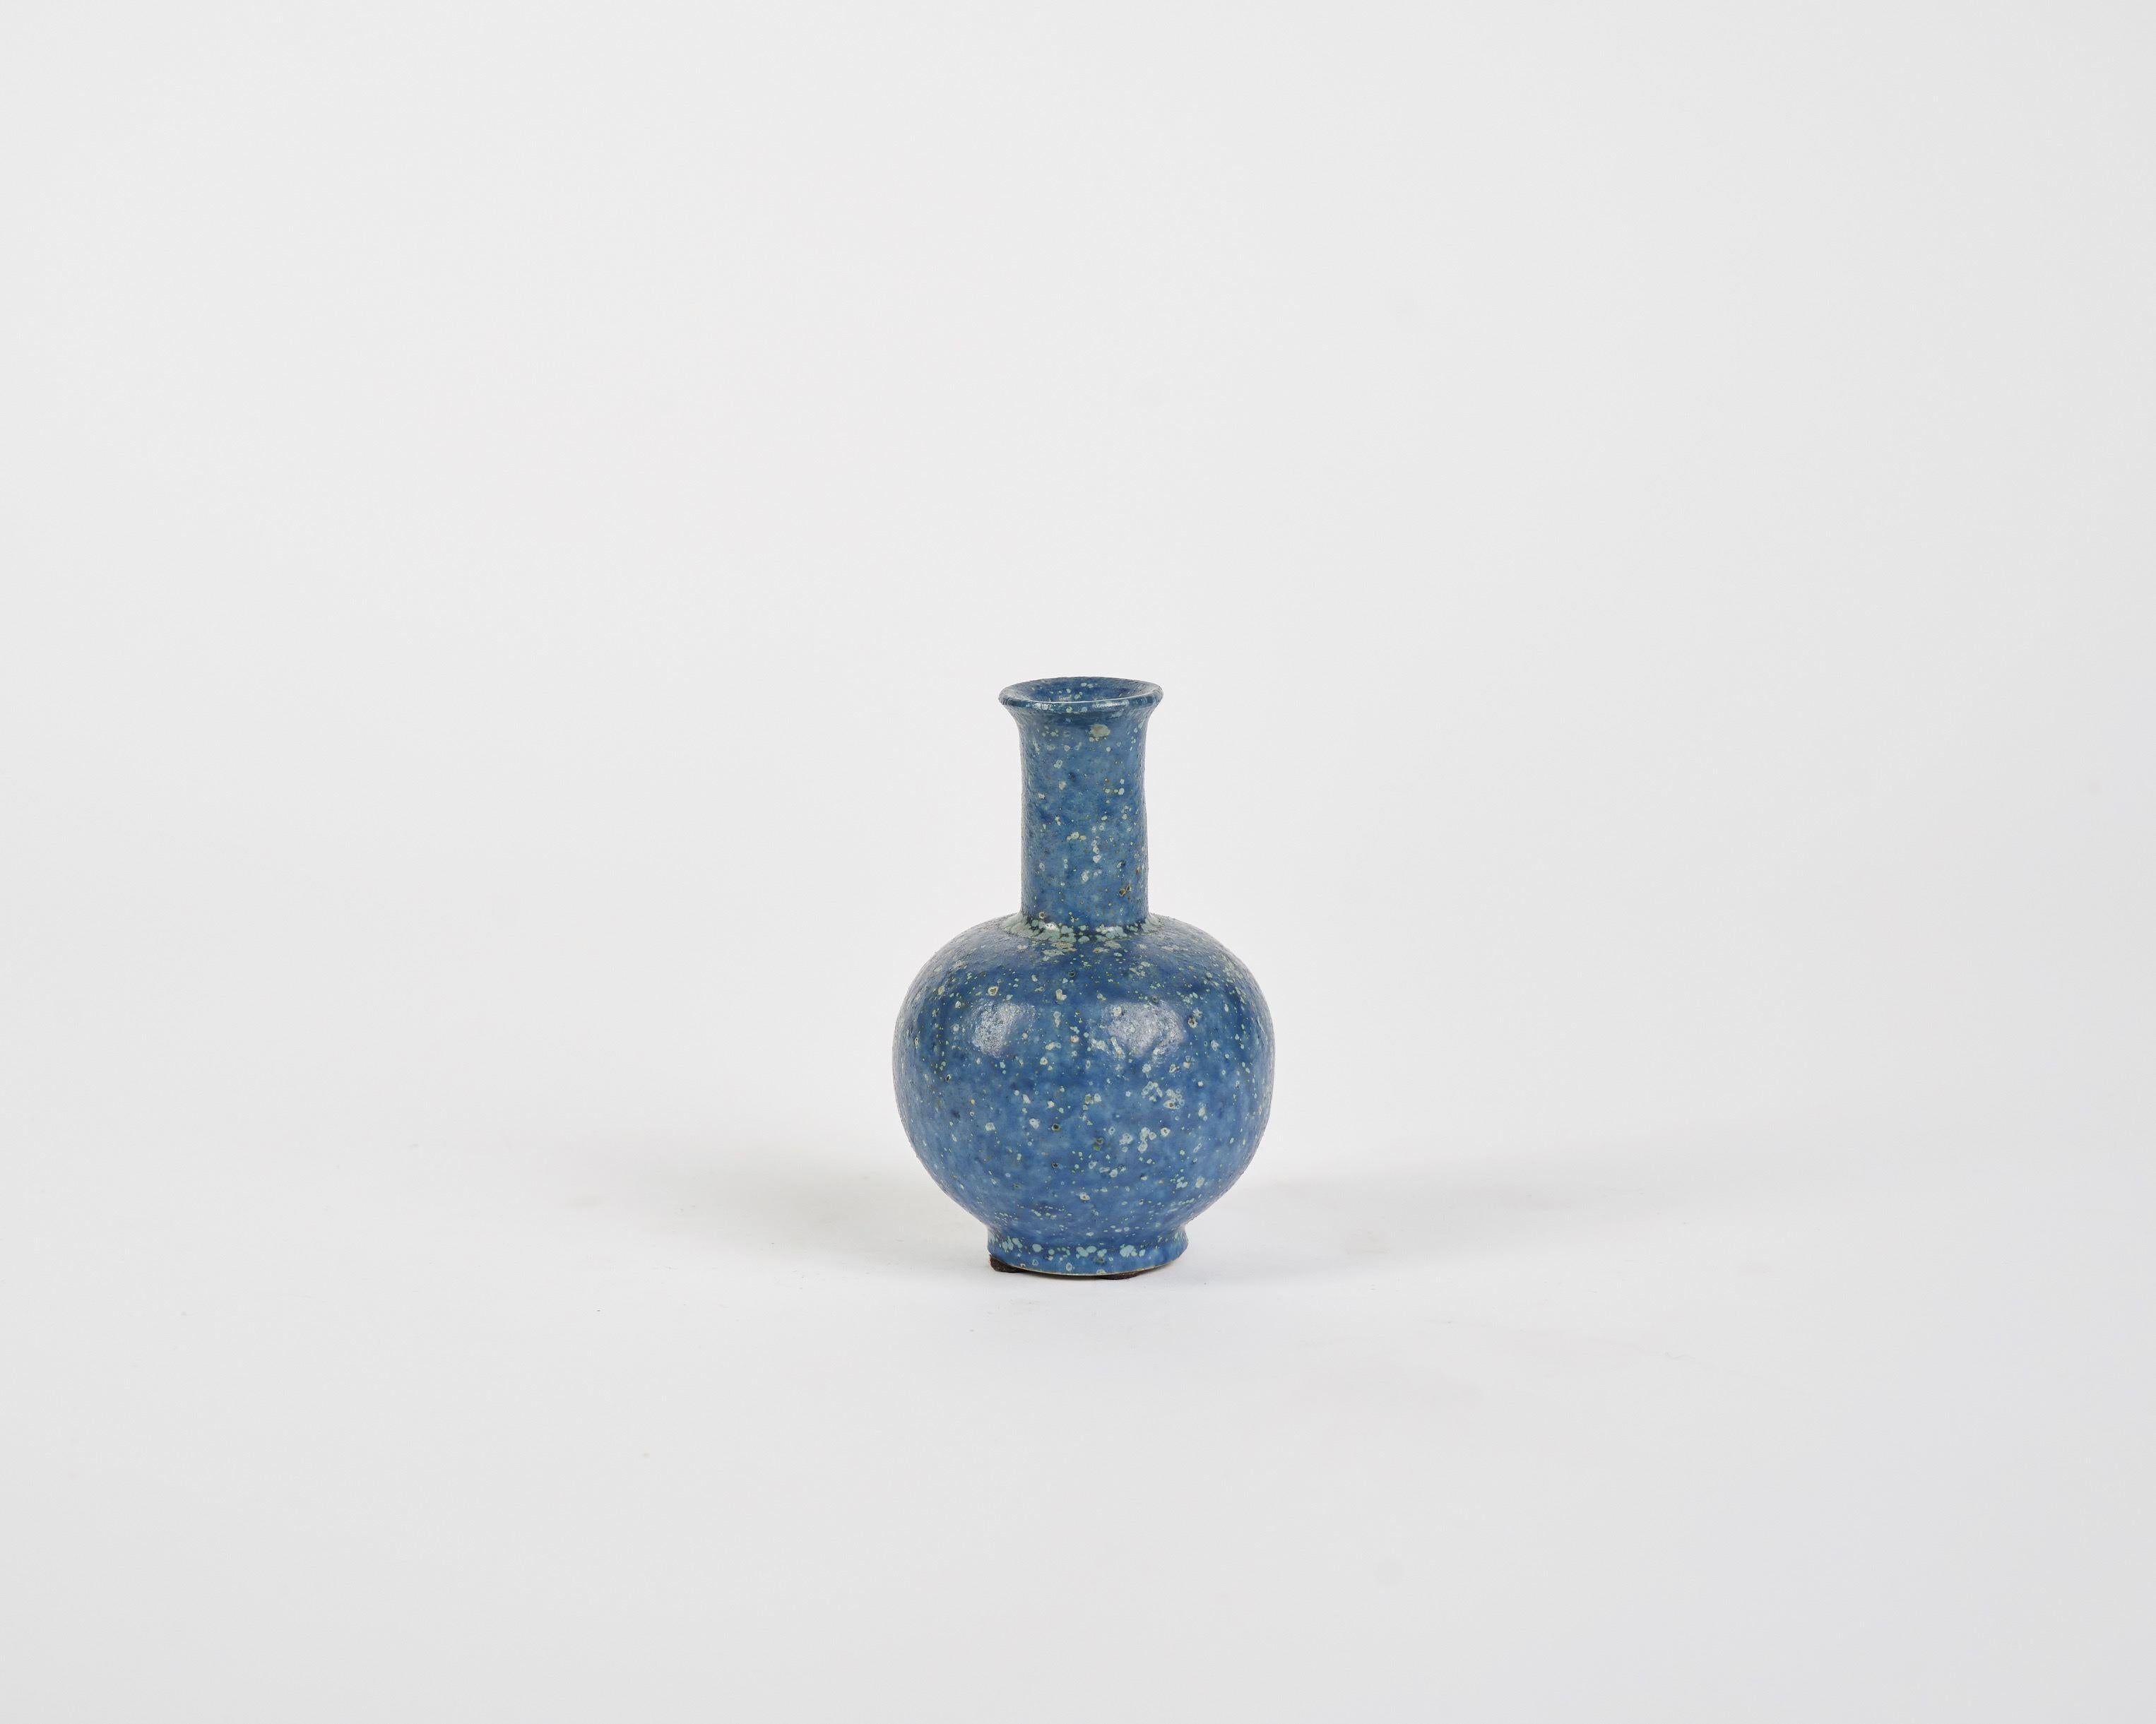 Glazed stoneware vase by Arne Bang.

Numbered: 17.